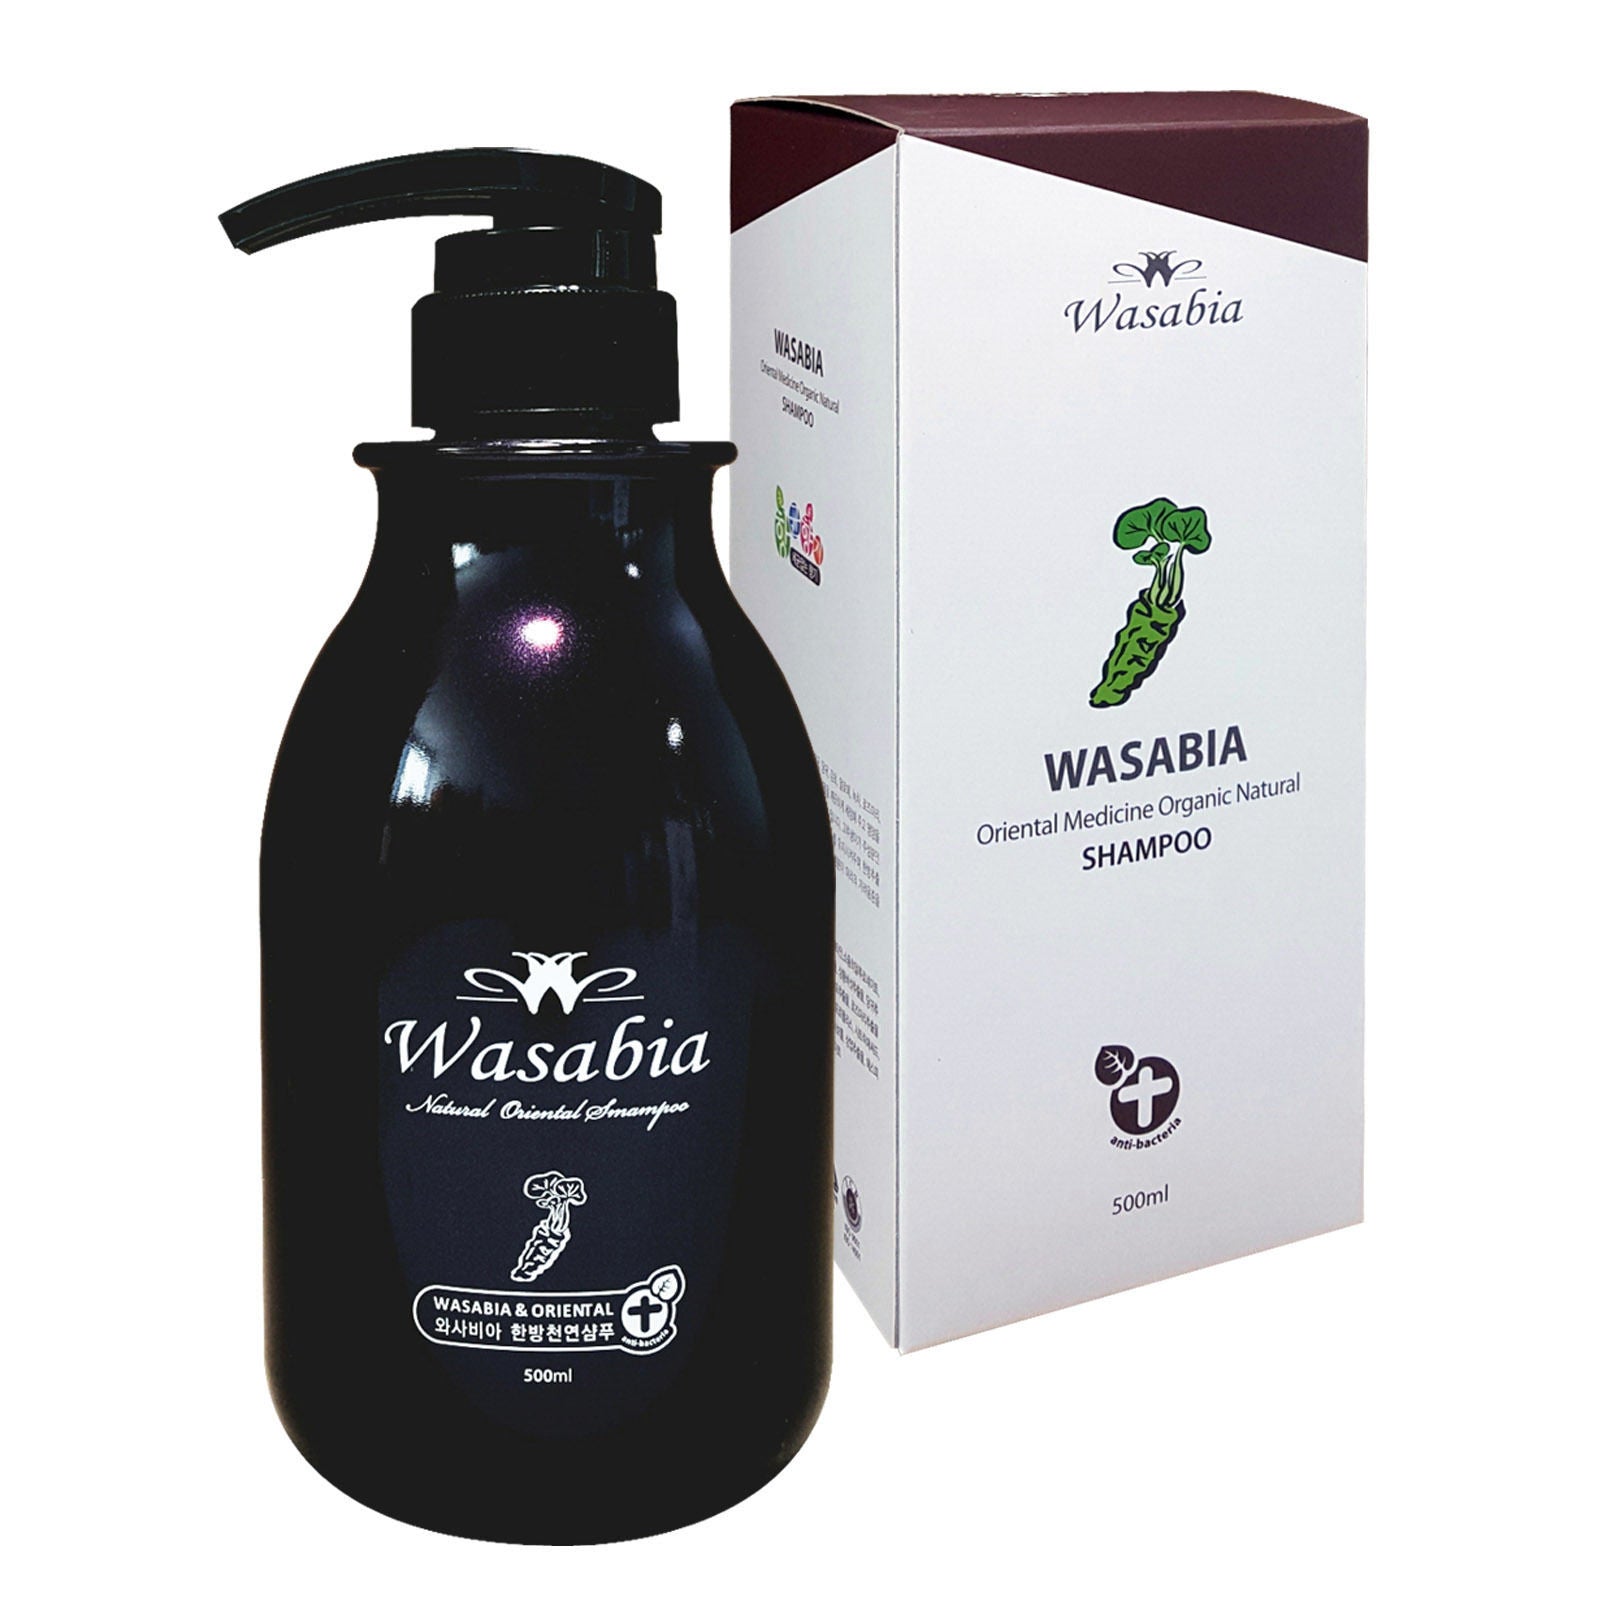 Wasabia - Oriental Medicine Natural Shampoo 500